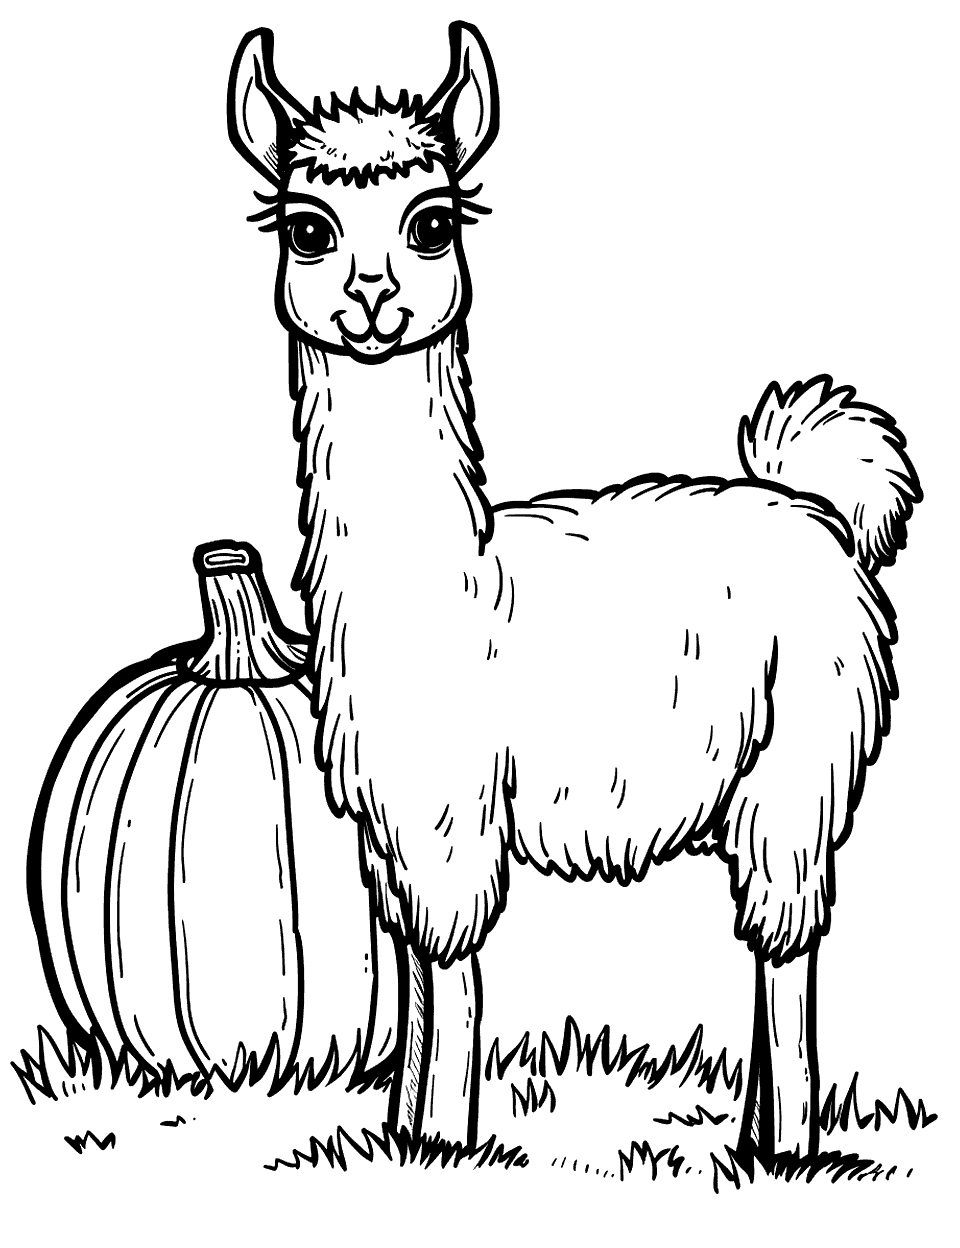 Llama and a Pumpkin Coloring Page - A llama next to a large pumpkin, perfect for fall.